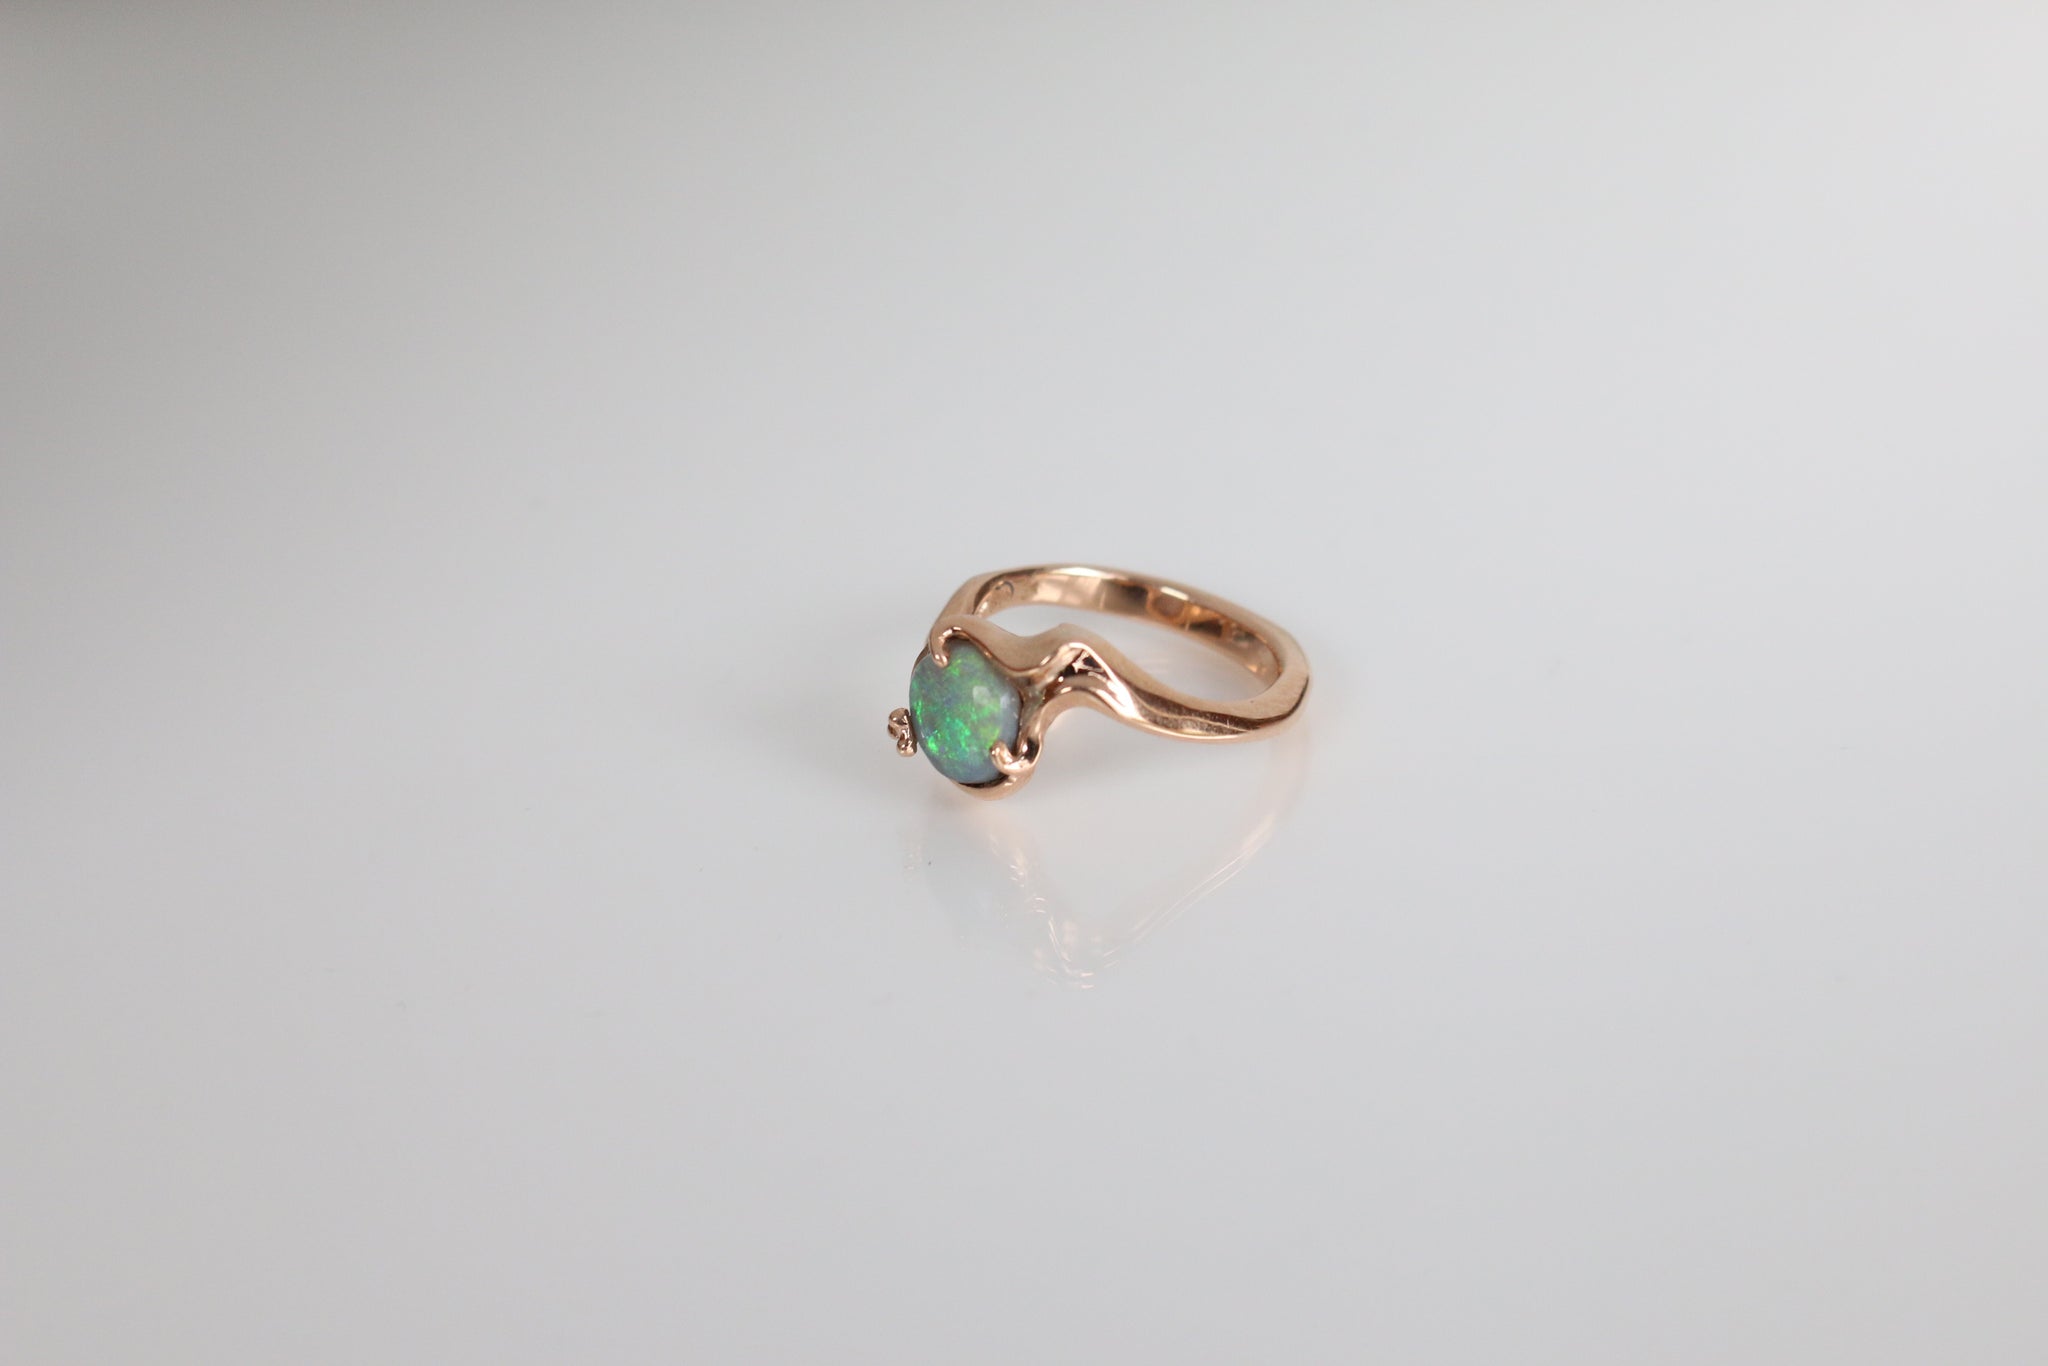 Australian Black Opal ring